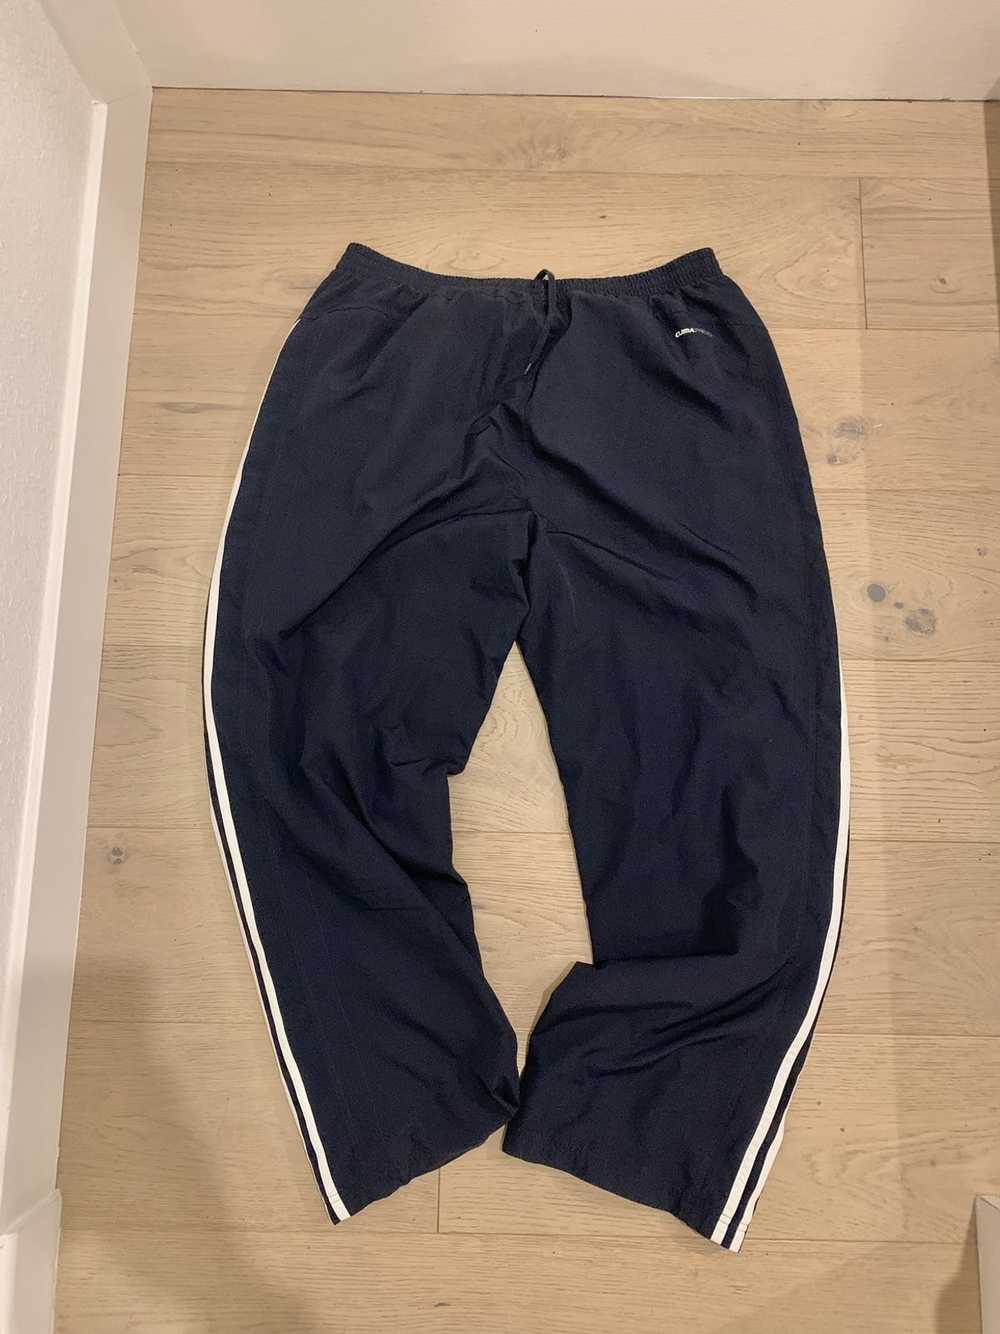 Vintage Early 2000’s Adidas Sweatpants - image 2